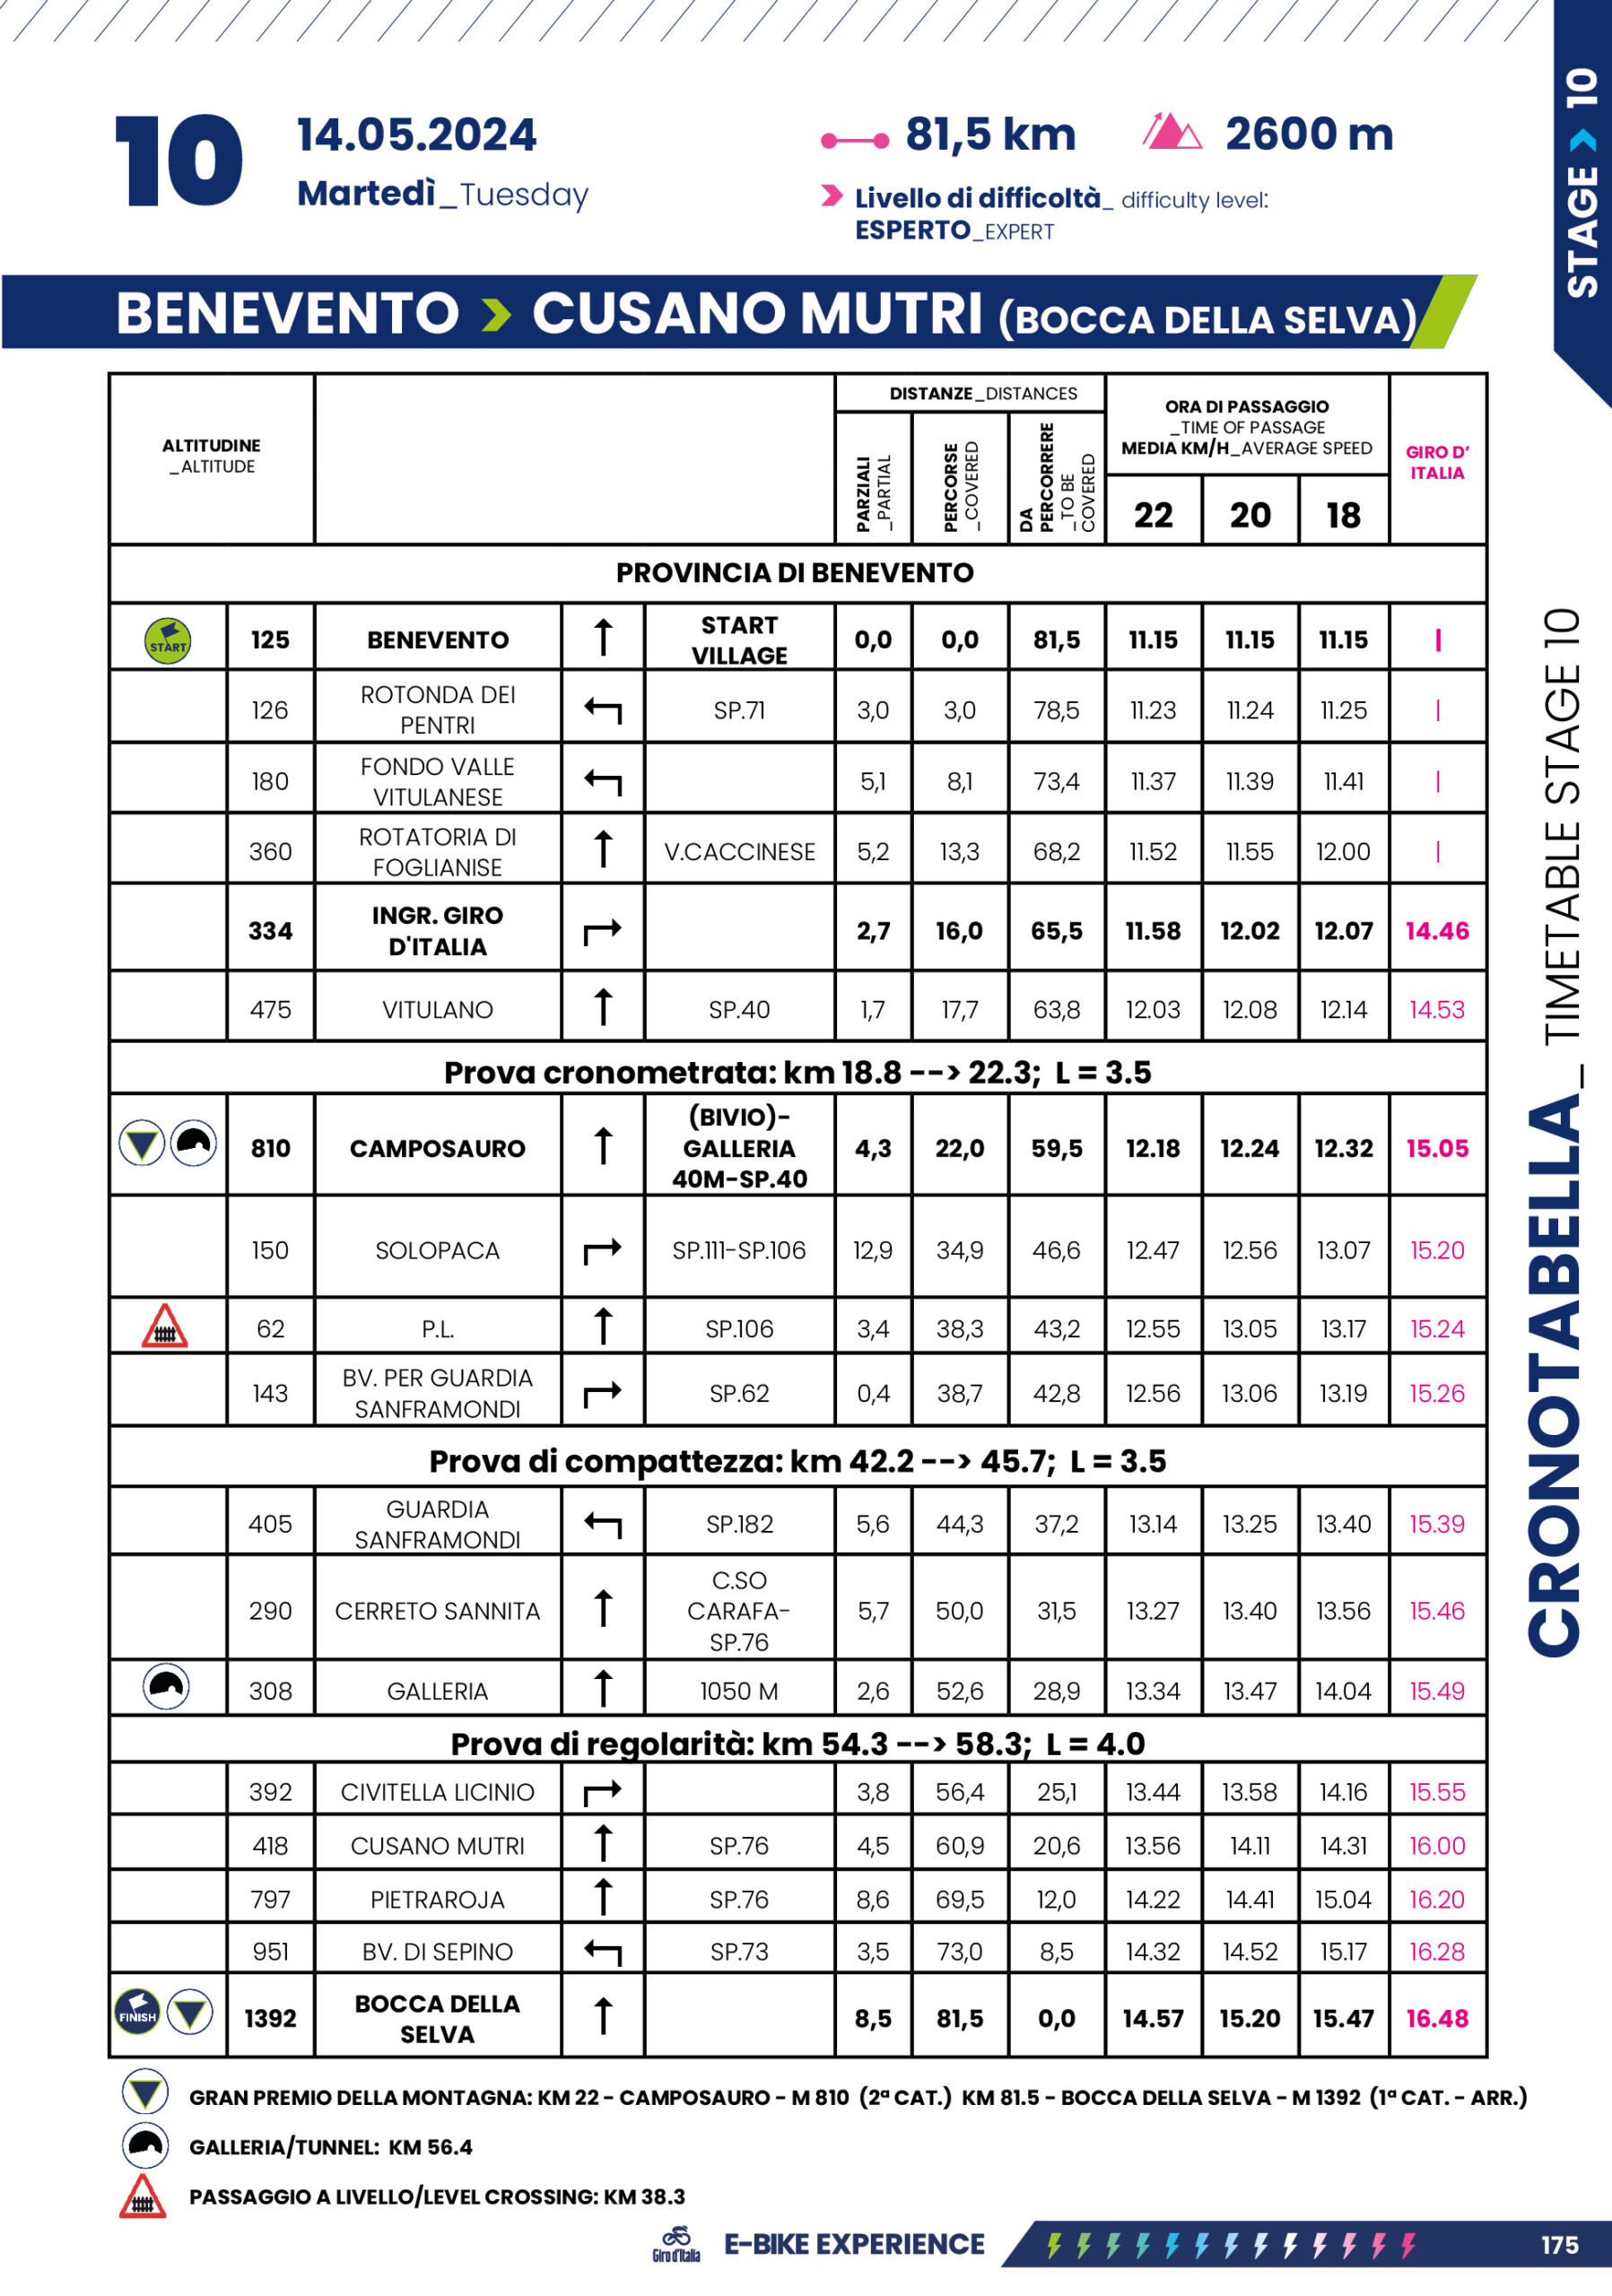 Cronotabella/Itinerary Timetable Tappa 10 Giro-E 2024